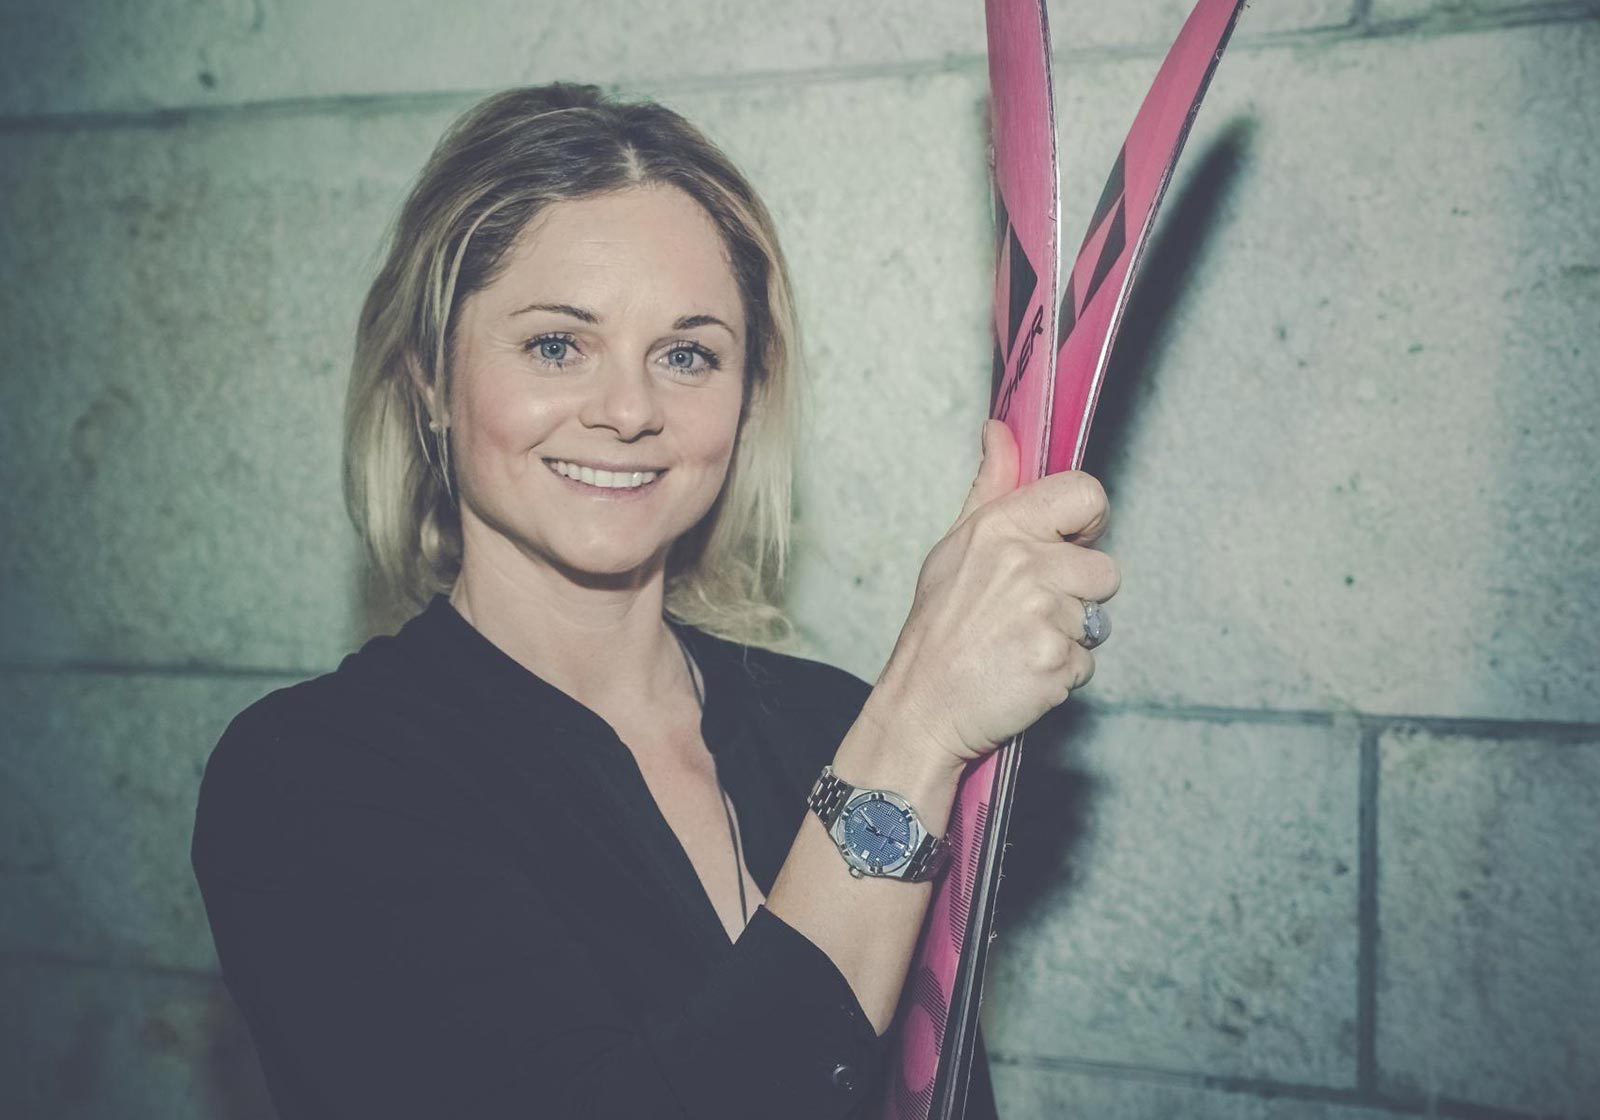 La skieuse alpine Sandra Lahnsteiner, nouvelle amie de la marque